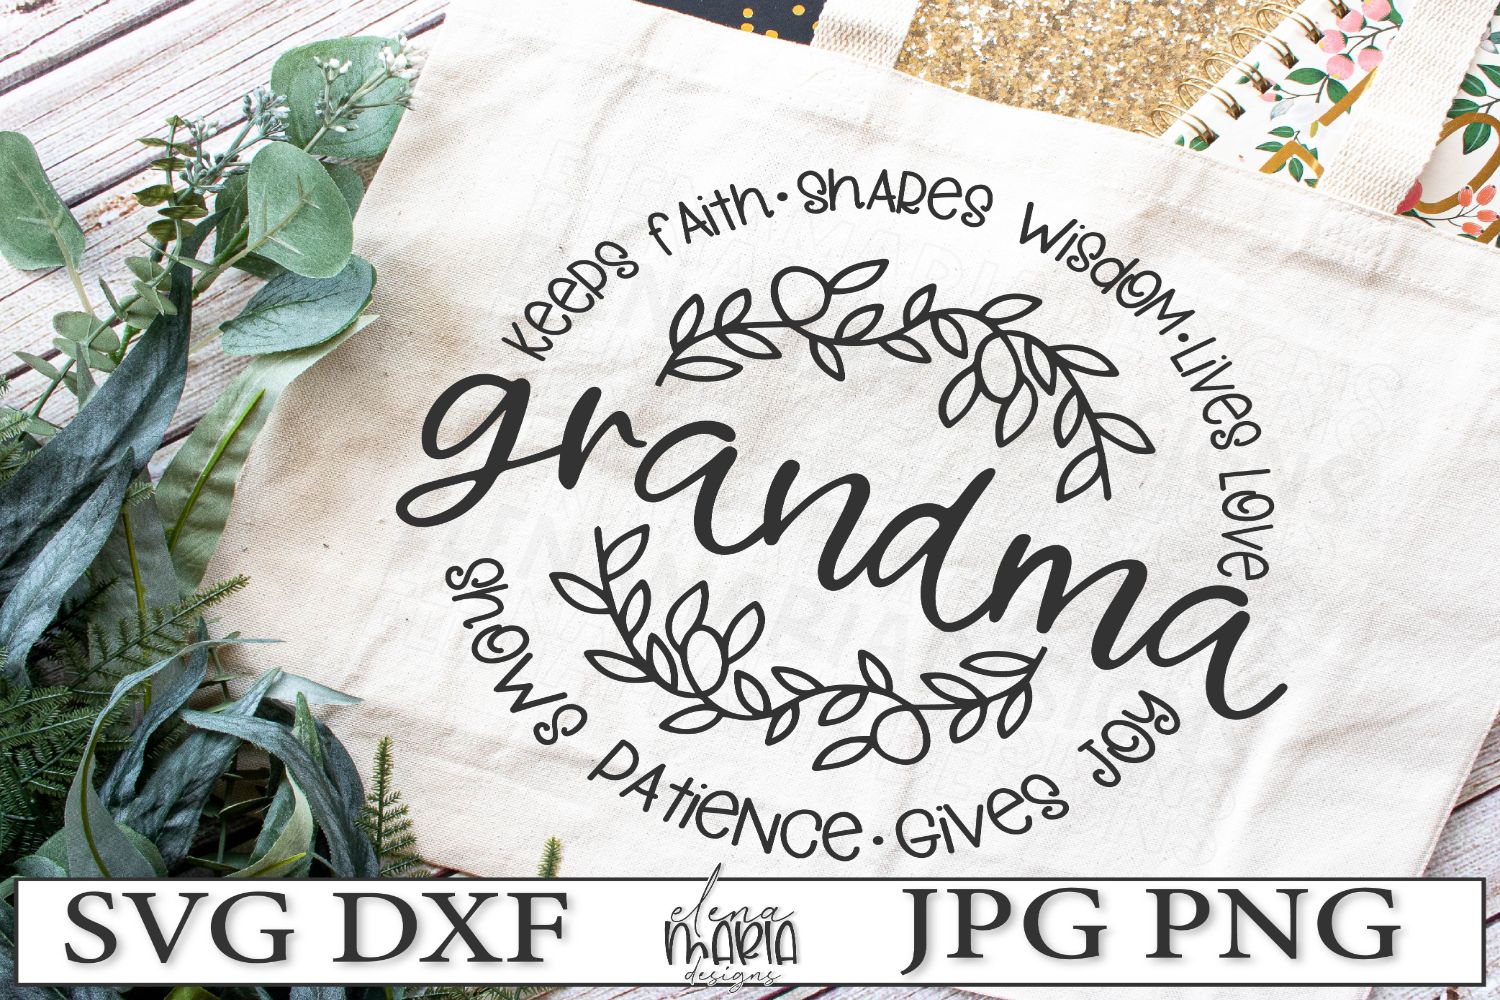 Grandma's SVG File | Mothers Day Svg